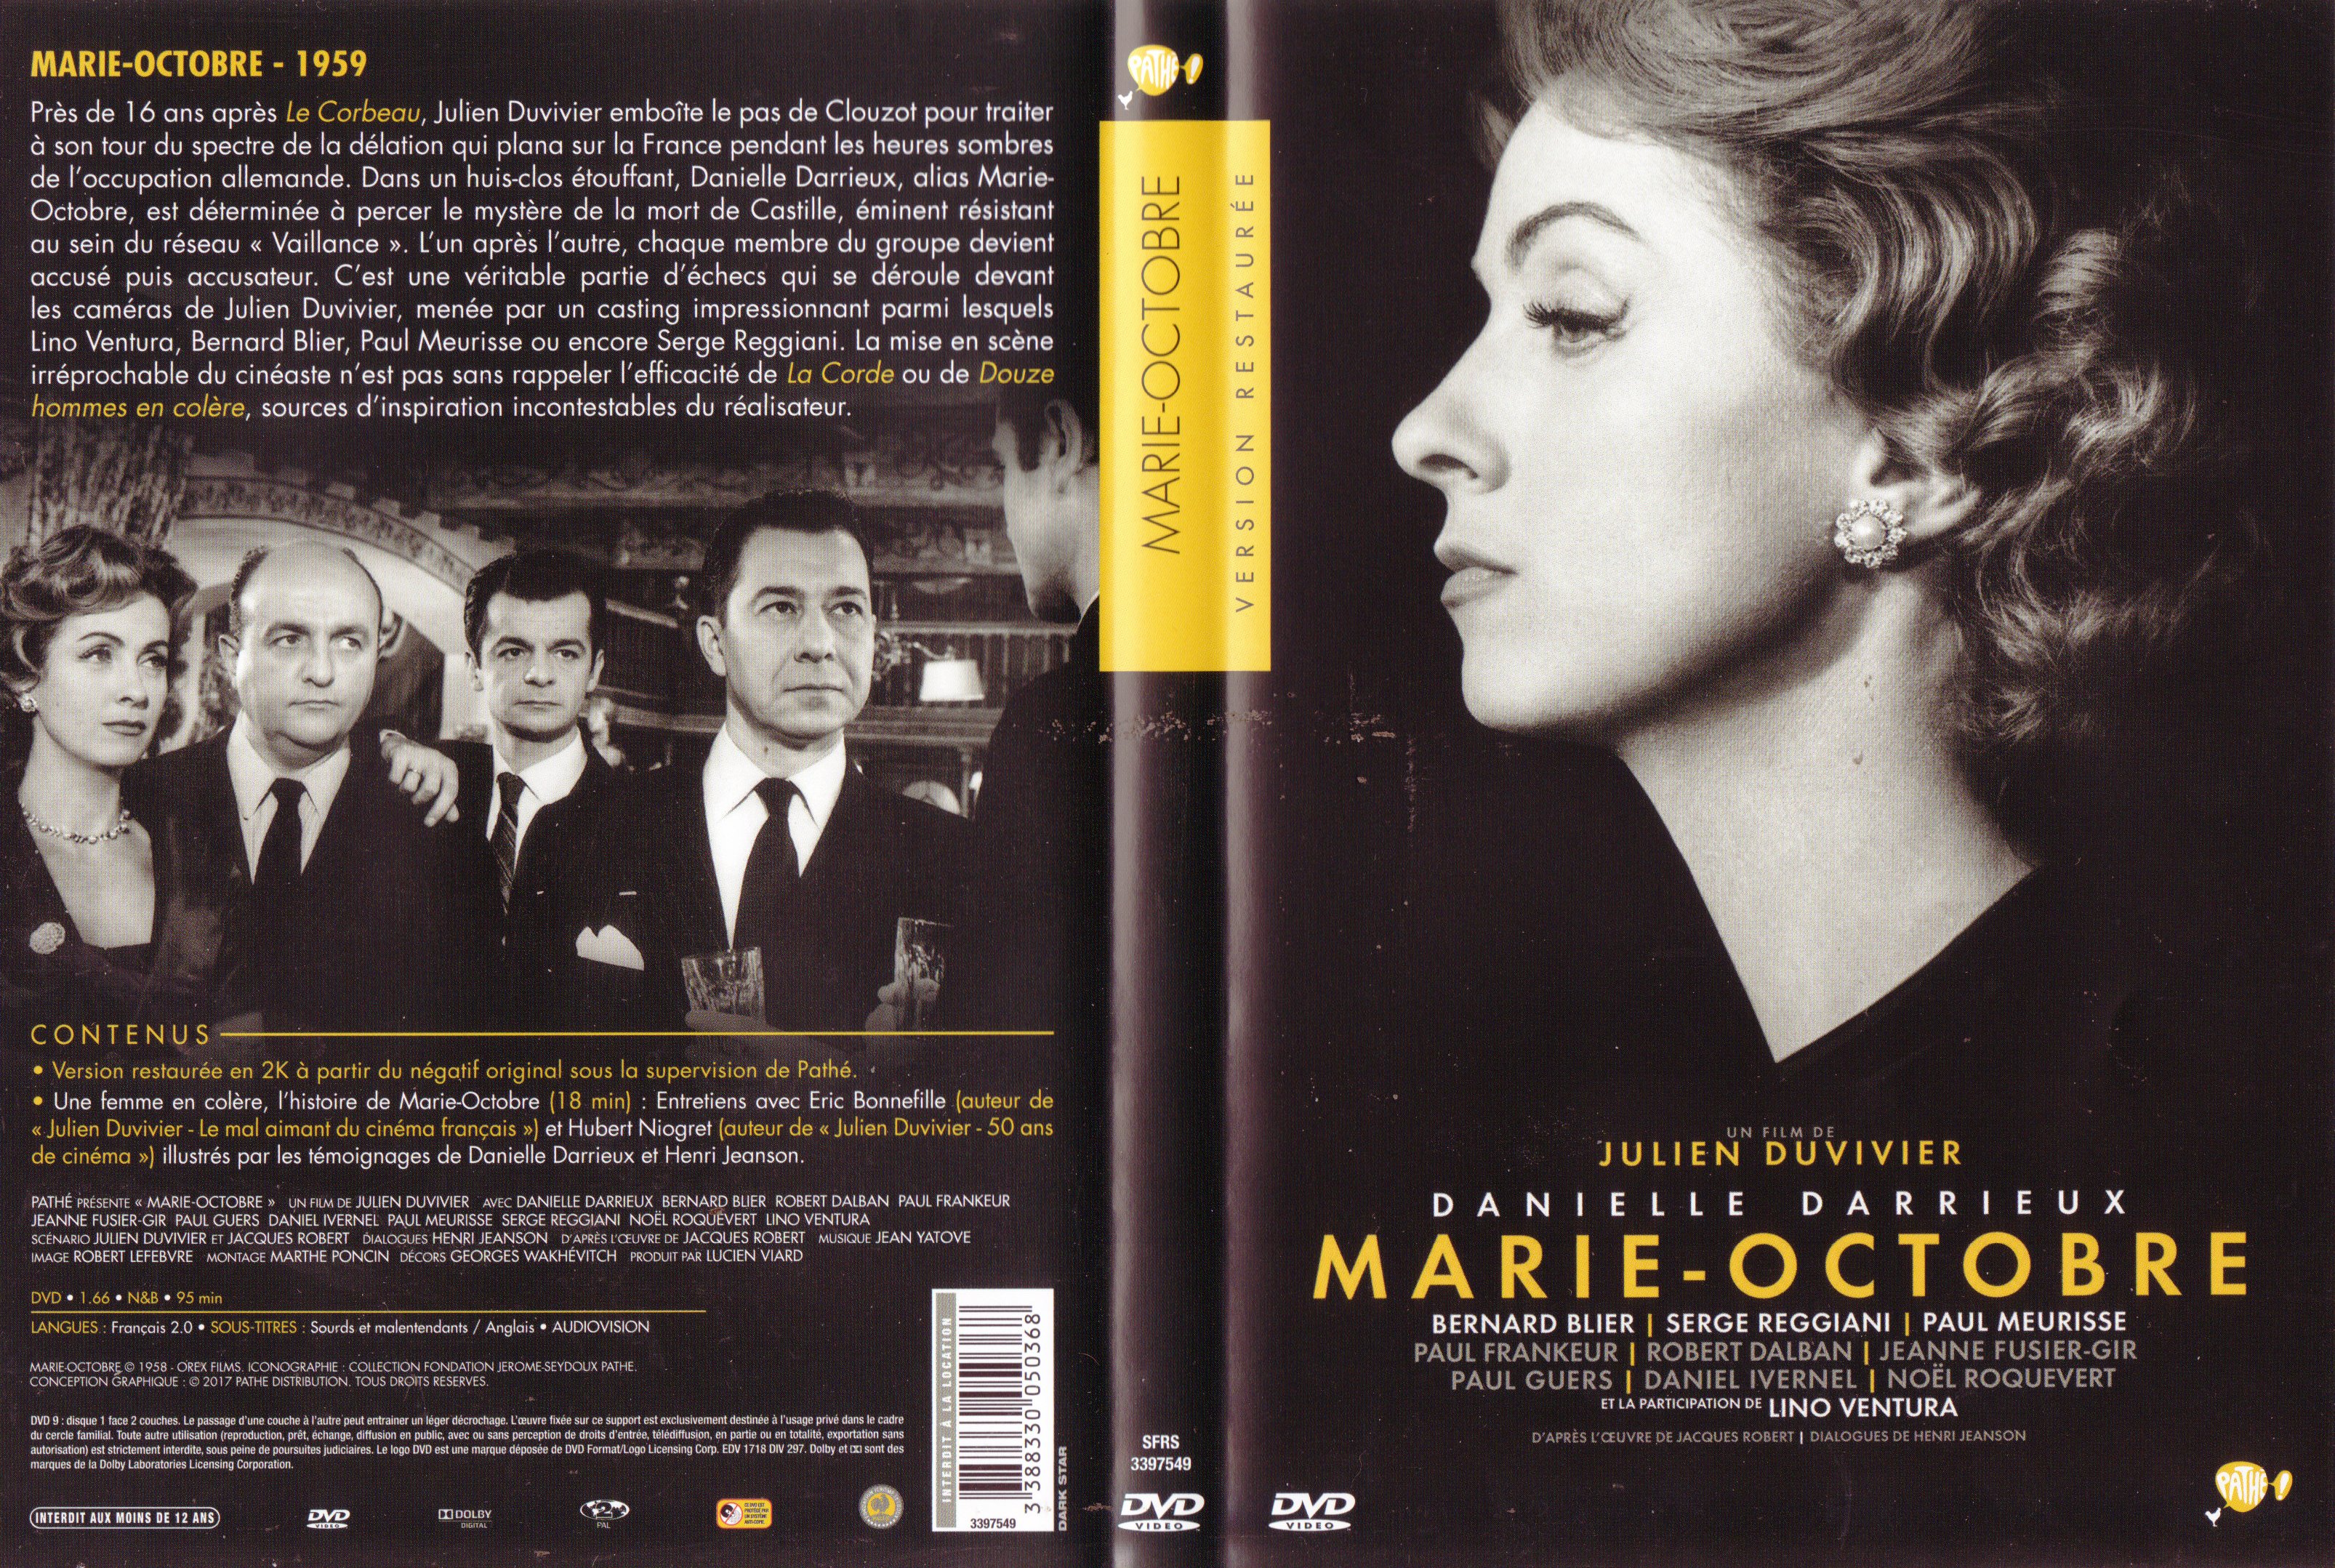 Jaquette DVD Marie-Octobre v3